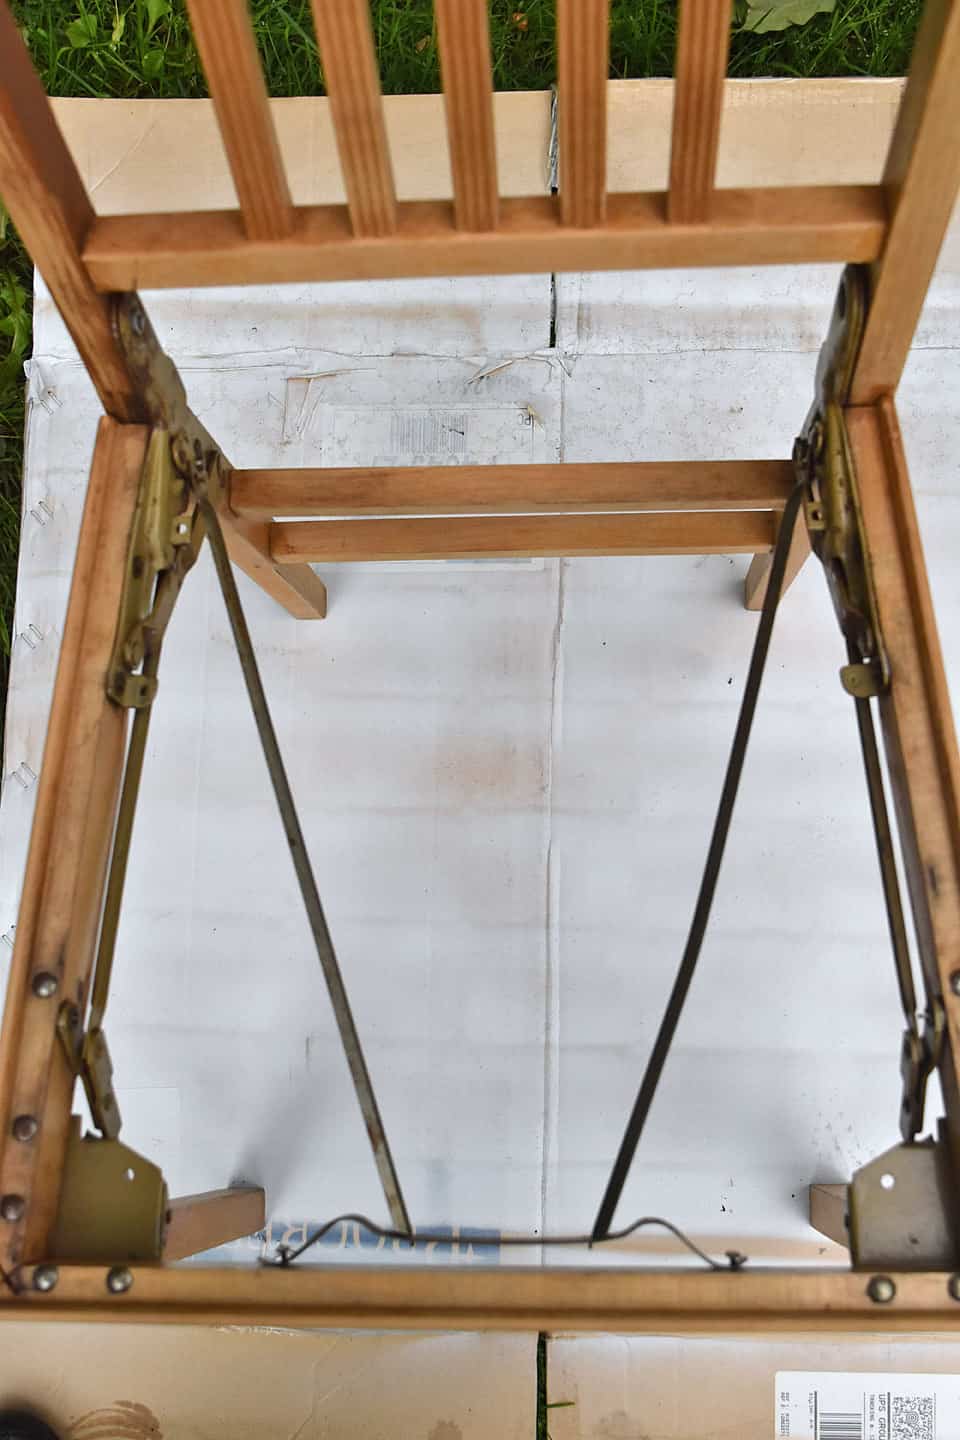 Leg-o-matic chair folding mechanism.